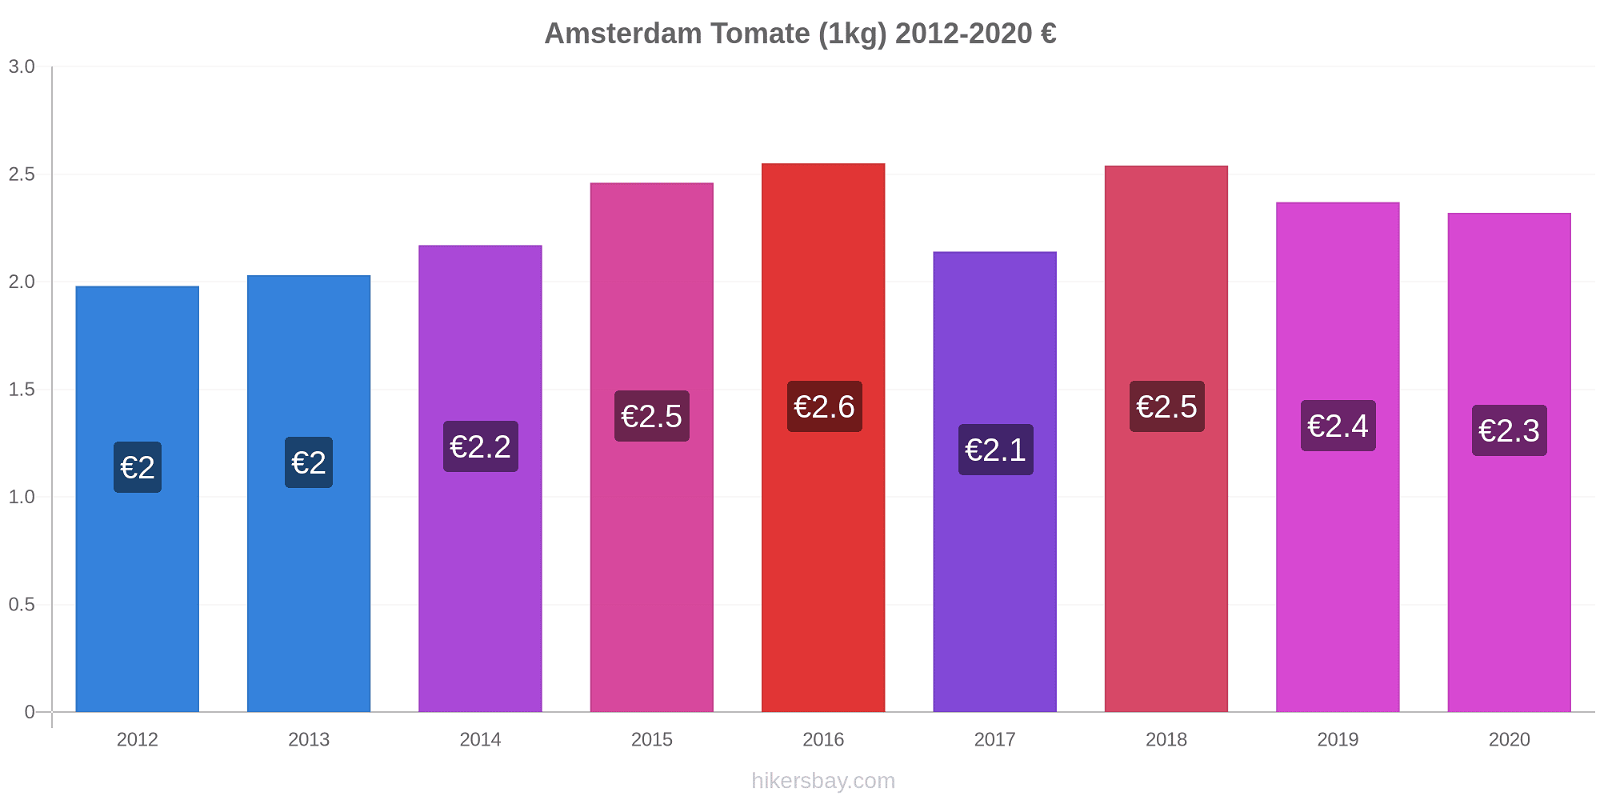 Amsterdam changements de prix Tomate (1kg) hikersbay.com